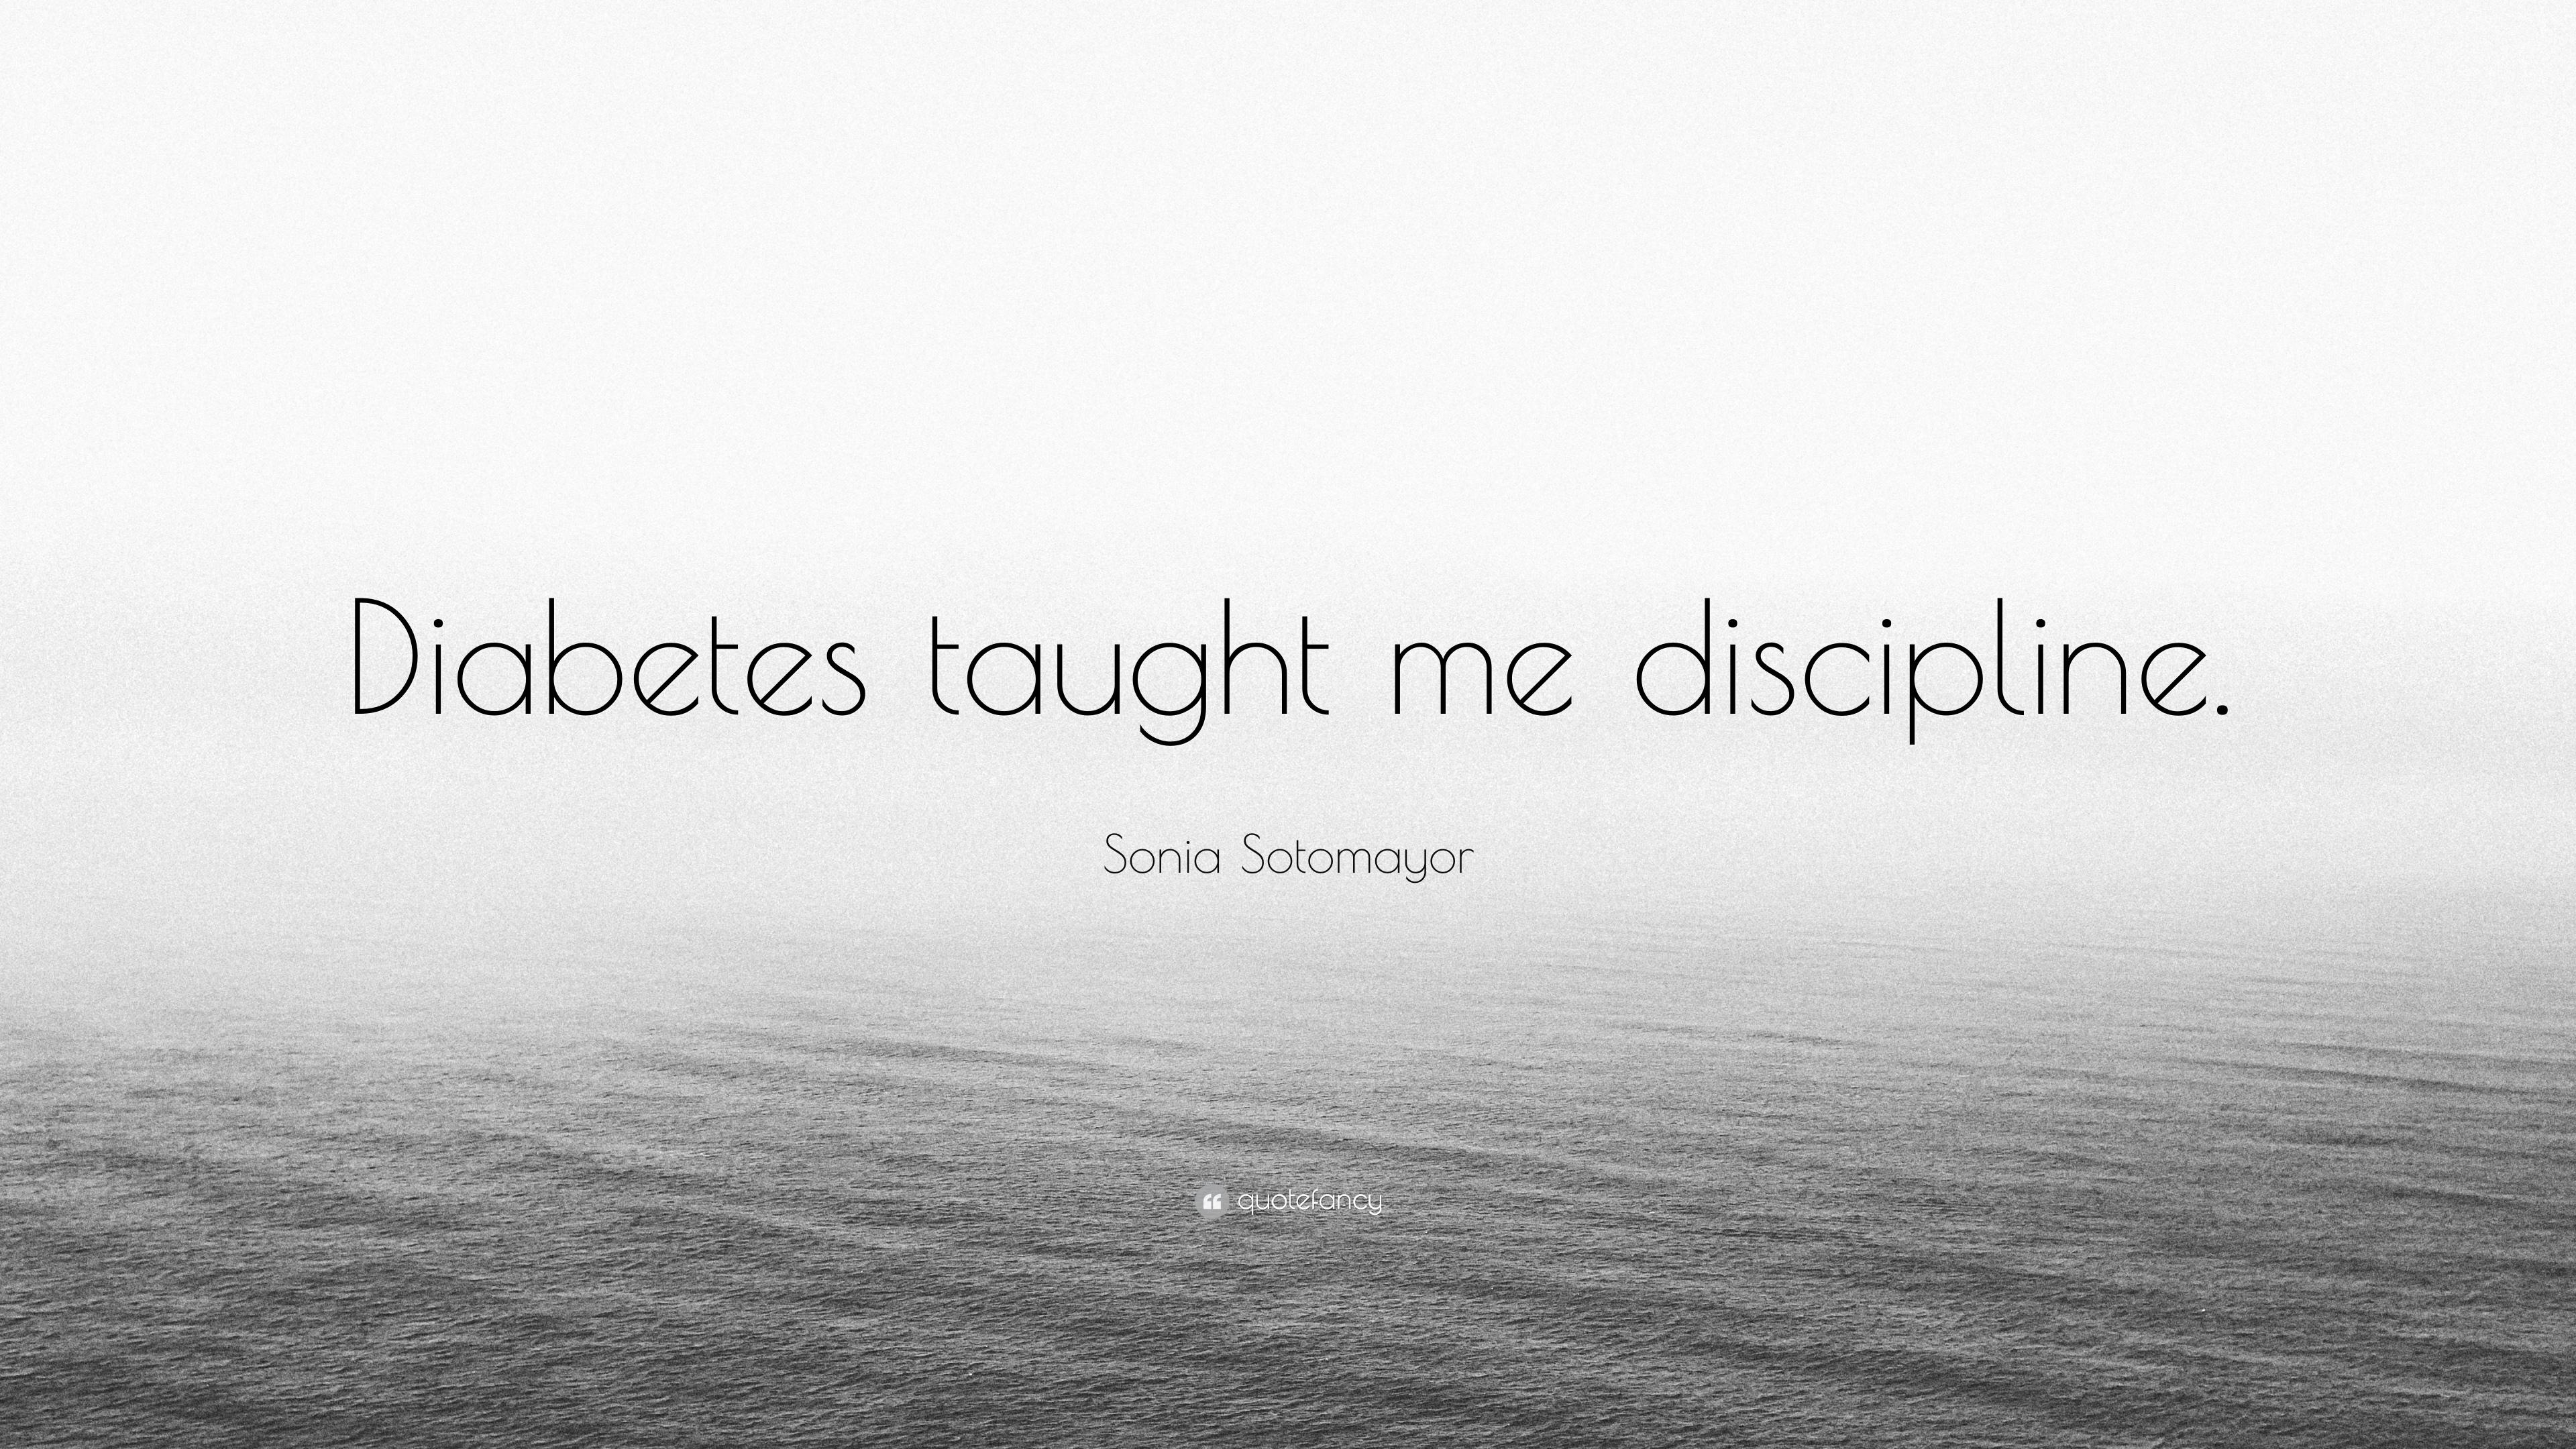 Sonia Sotomayor Quote: “Diabetes taught me discipline.” 9